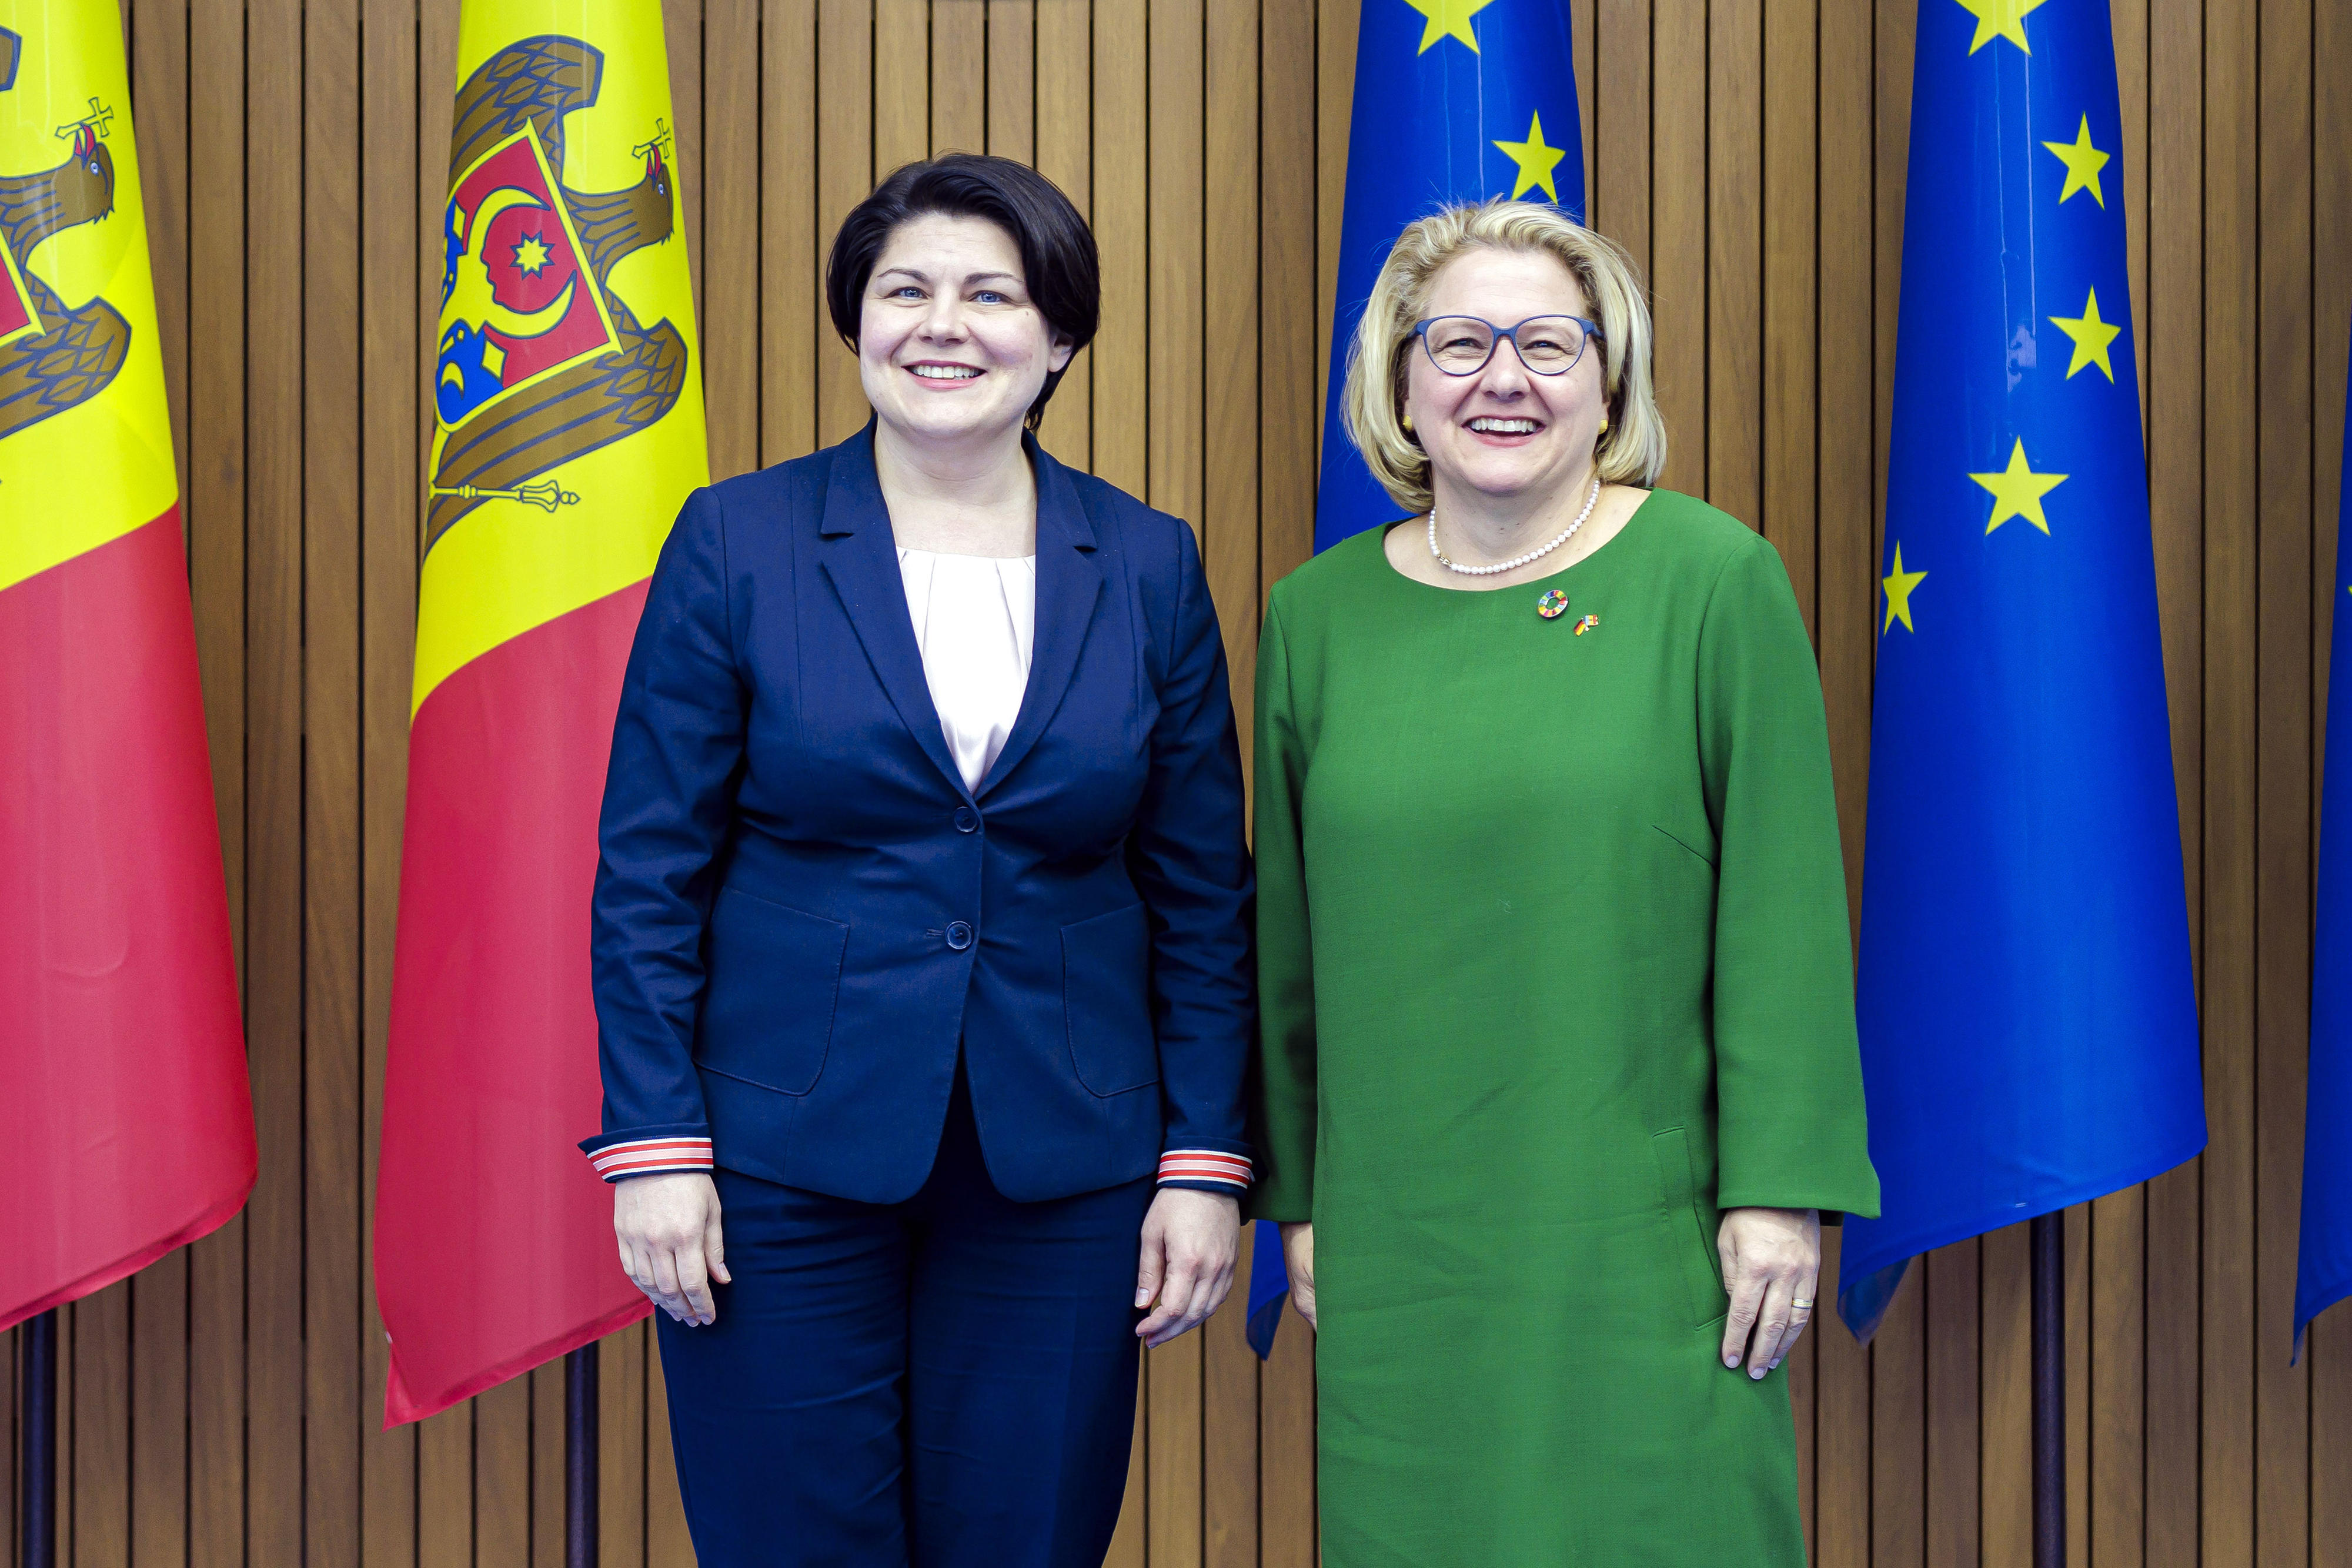 Natalia Gavriliţa, Prime Minister of the Republic of Moldova, and German Development Minister Svenja Schulze